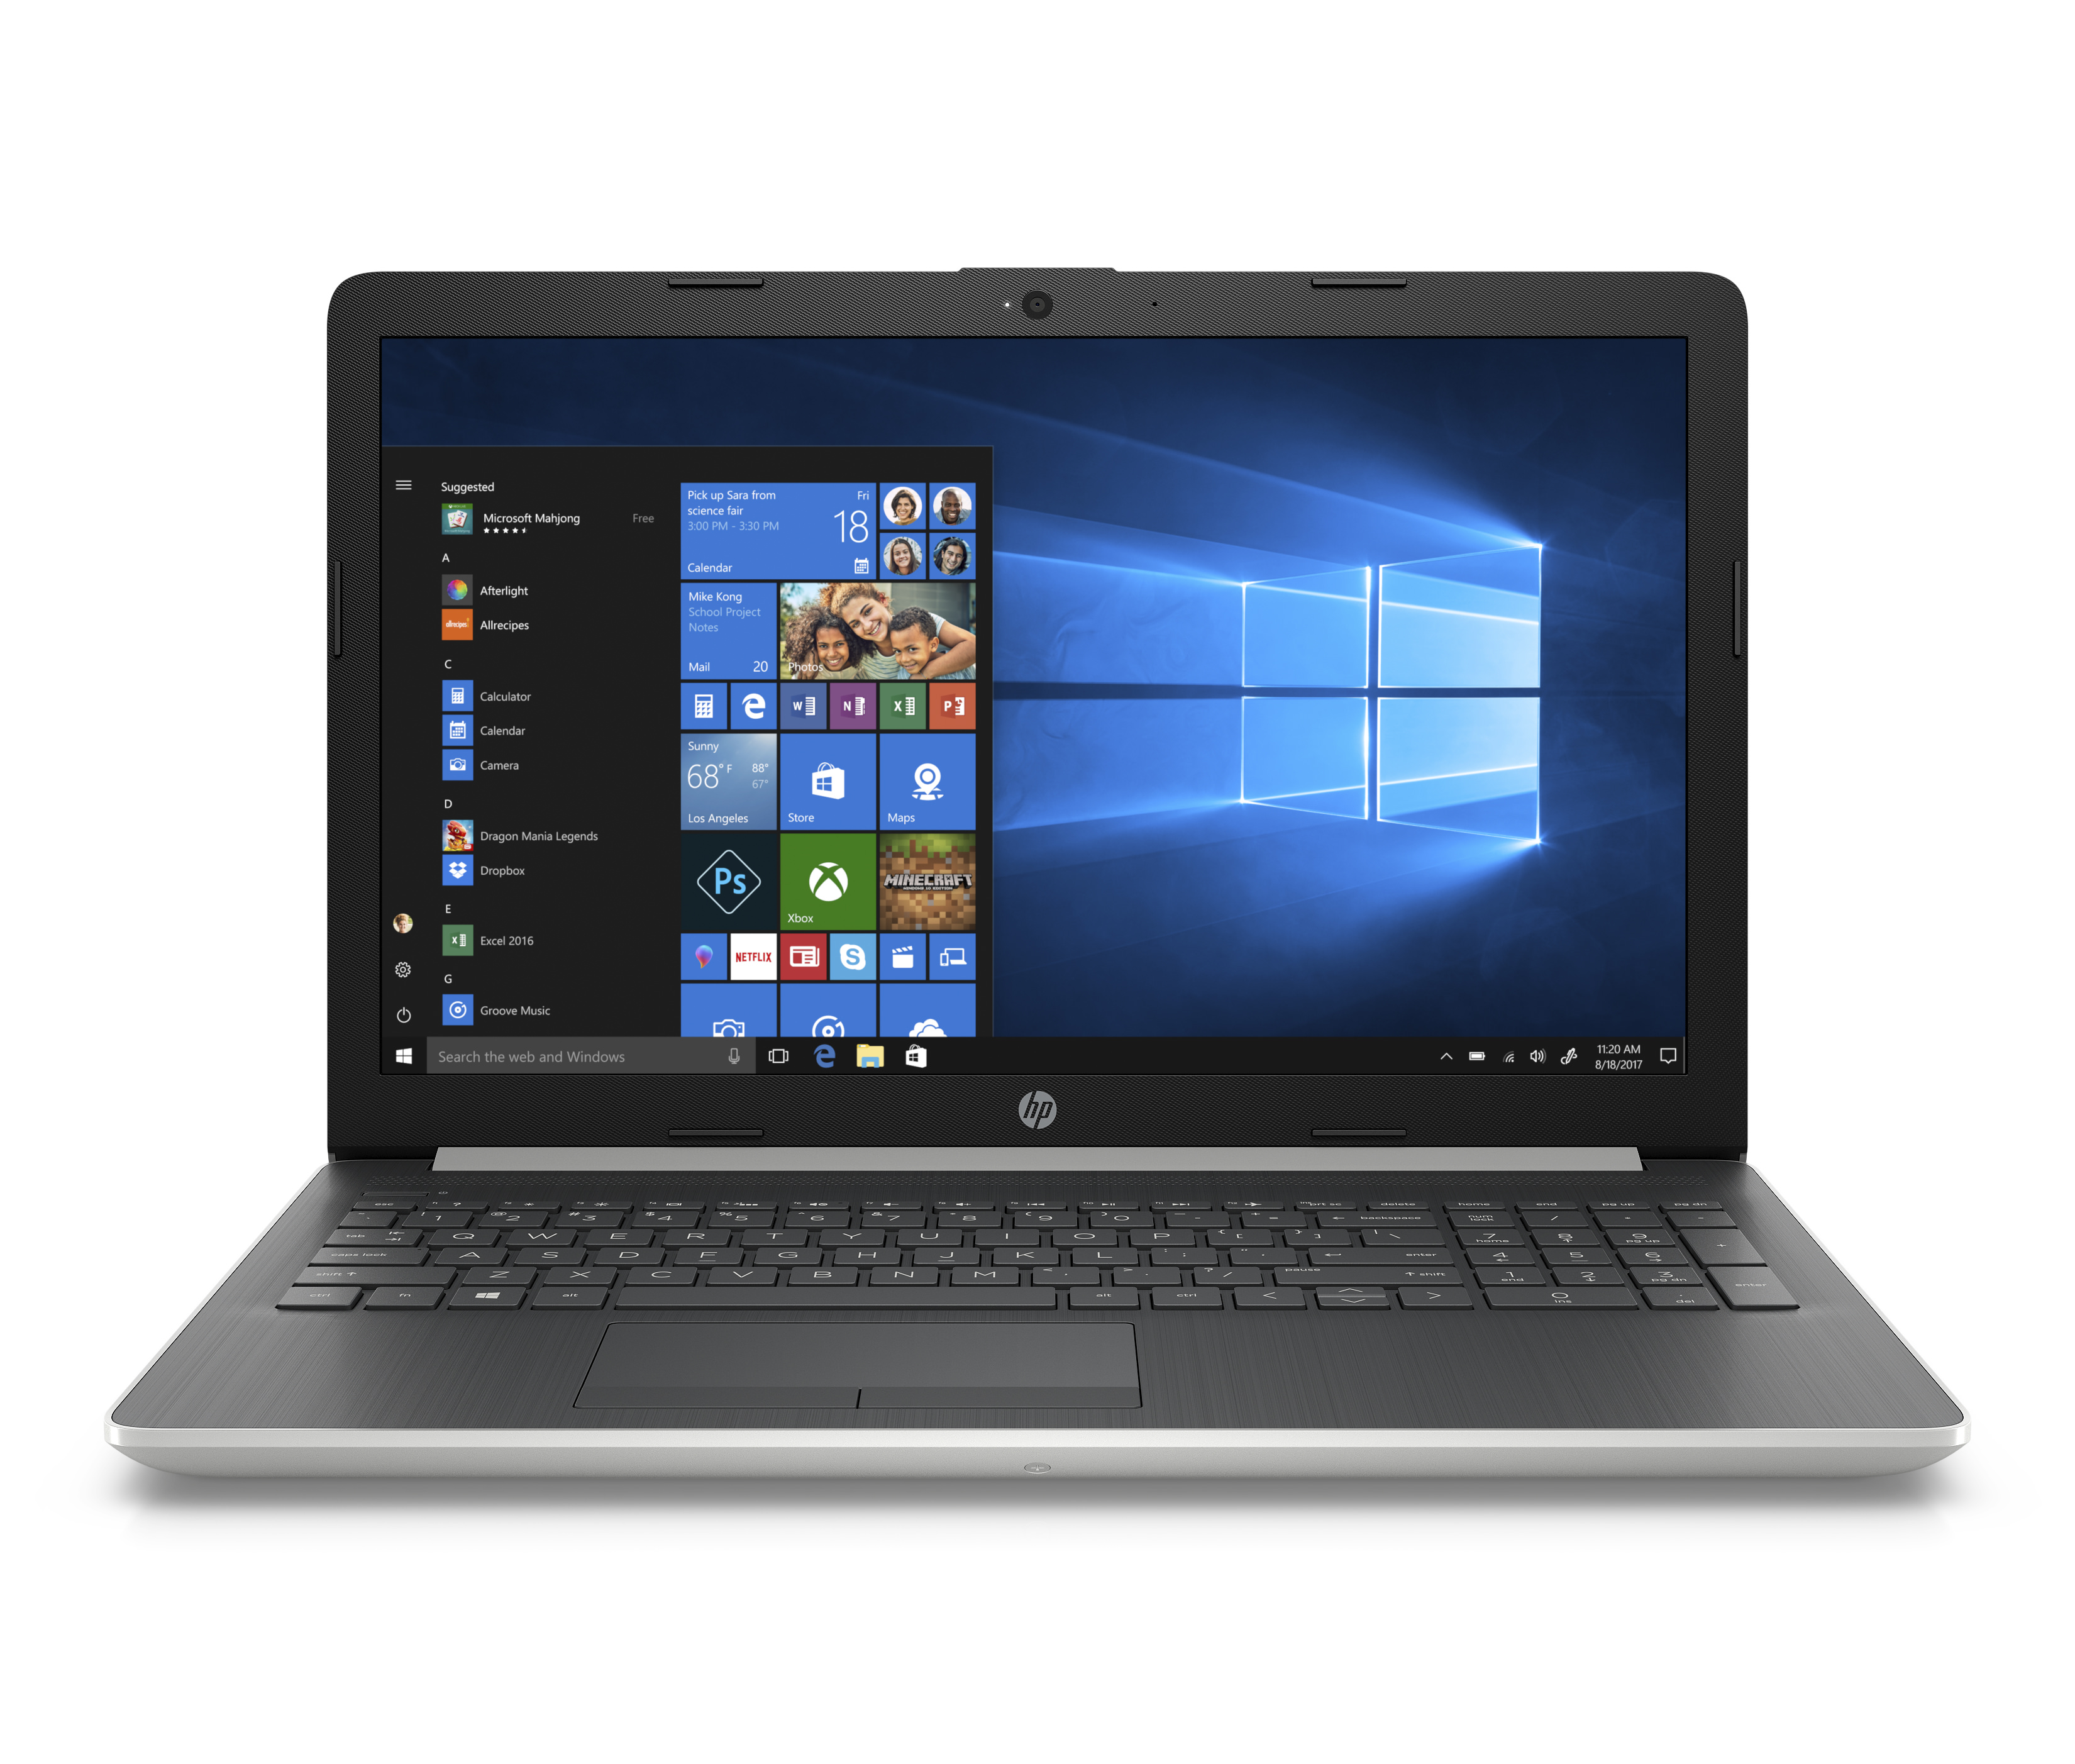 HP 15 Silver Fusion Laptop 15.6" , Intel Core i3-8130U, Intel UHD Graphics 620, 1TB HDD + 16GB Intel Optane memory, 4GB SDRAM, DVD, 15-da0032wm - image 1 of 5